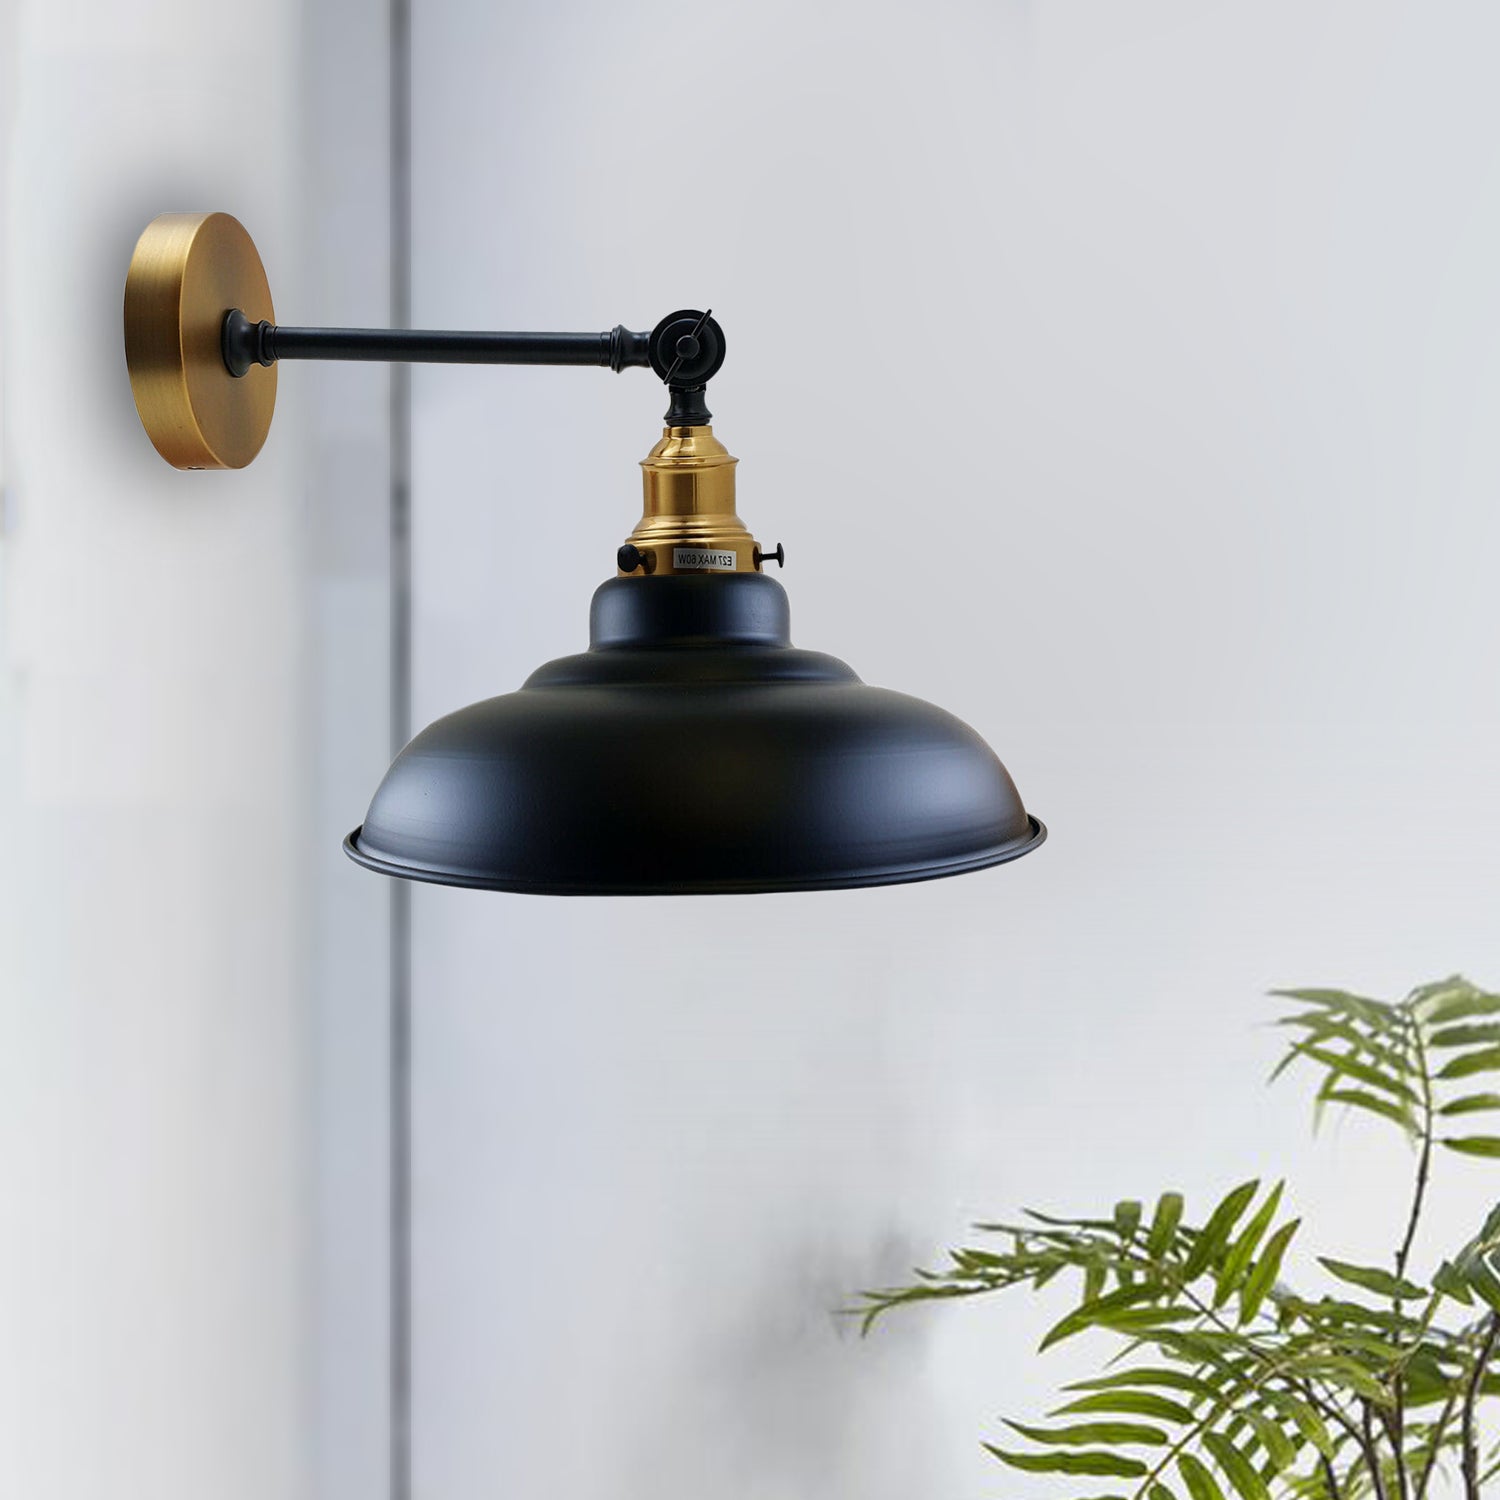 Wall Light Fixture Loft Style Industrial Wall Sconce - Black